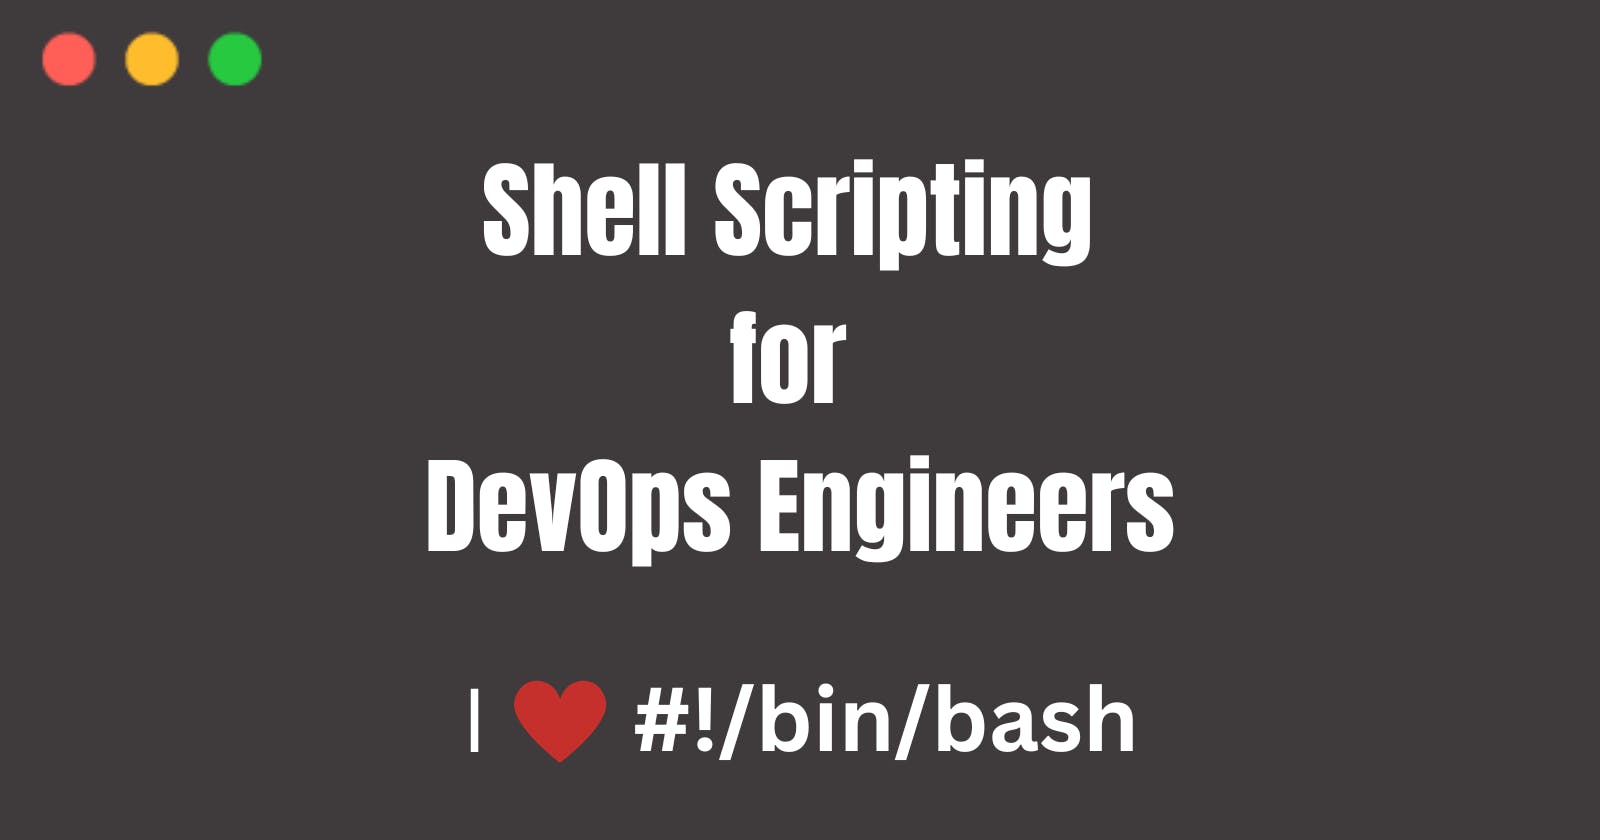 Day 4 Task: Basic Linux Shell Scripting for DevOps Engineers.